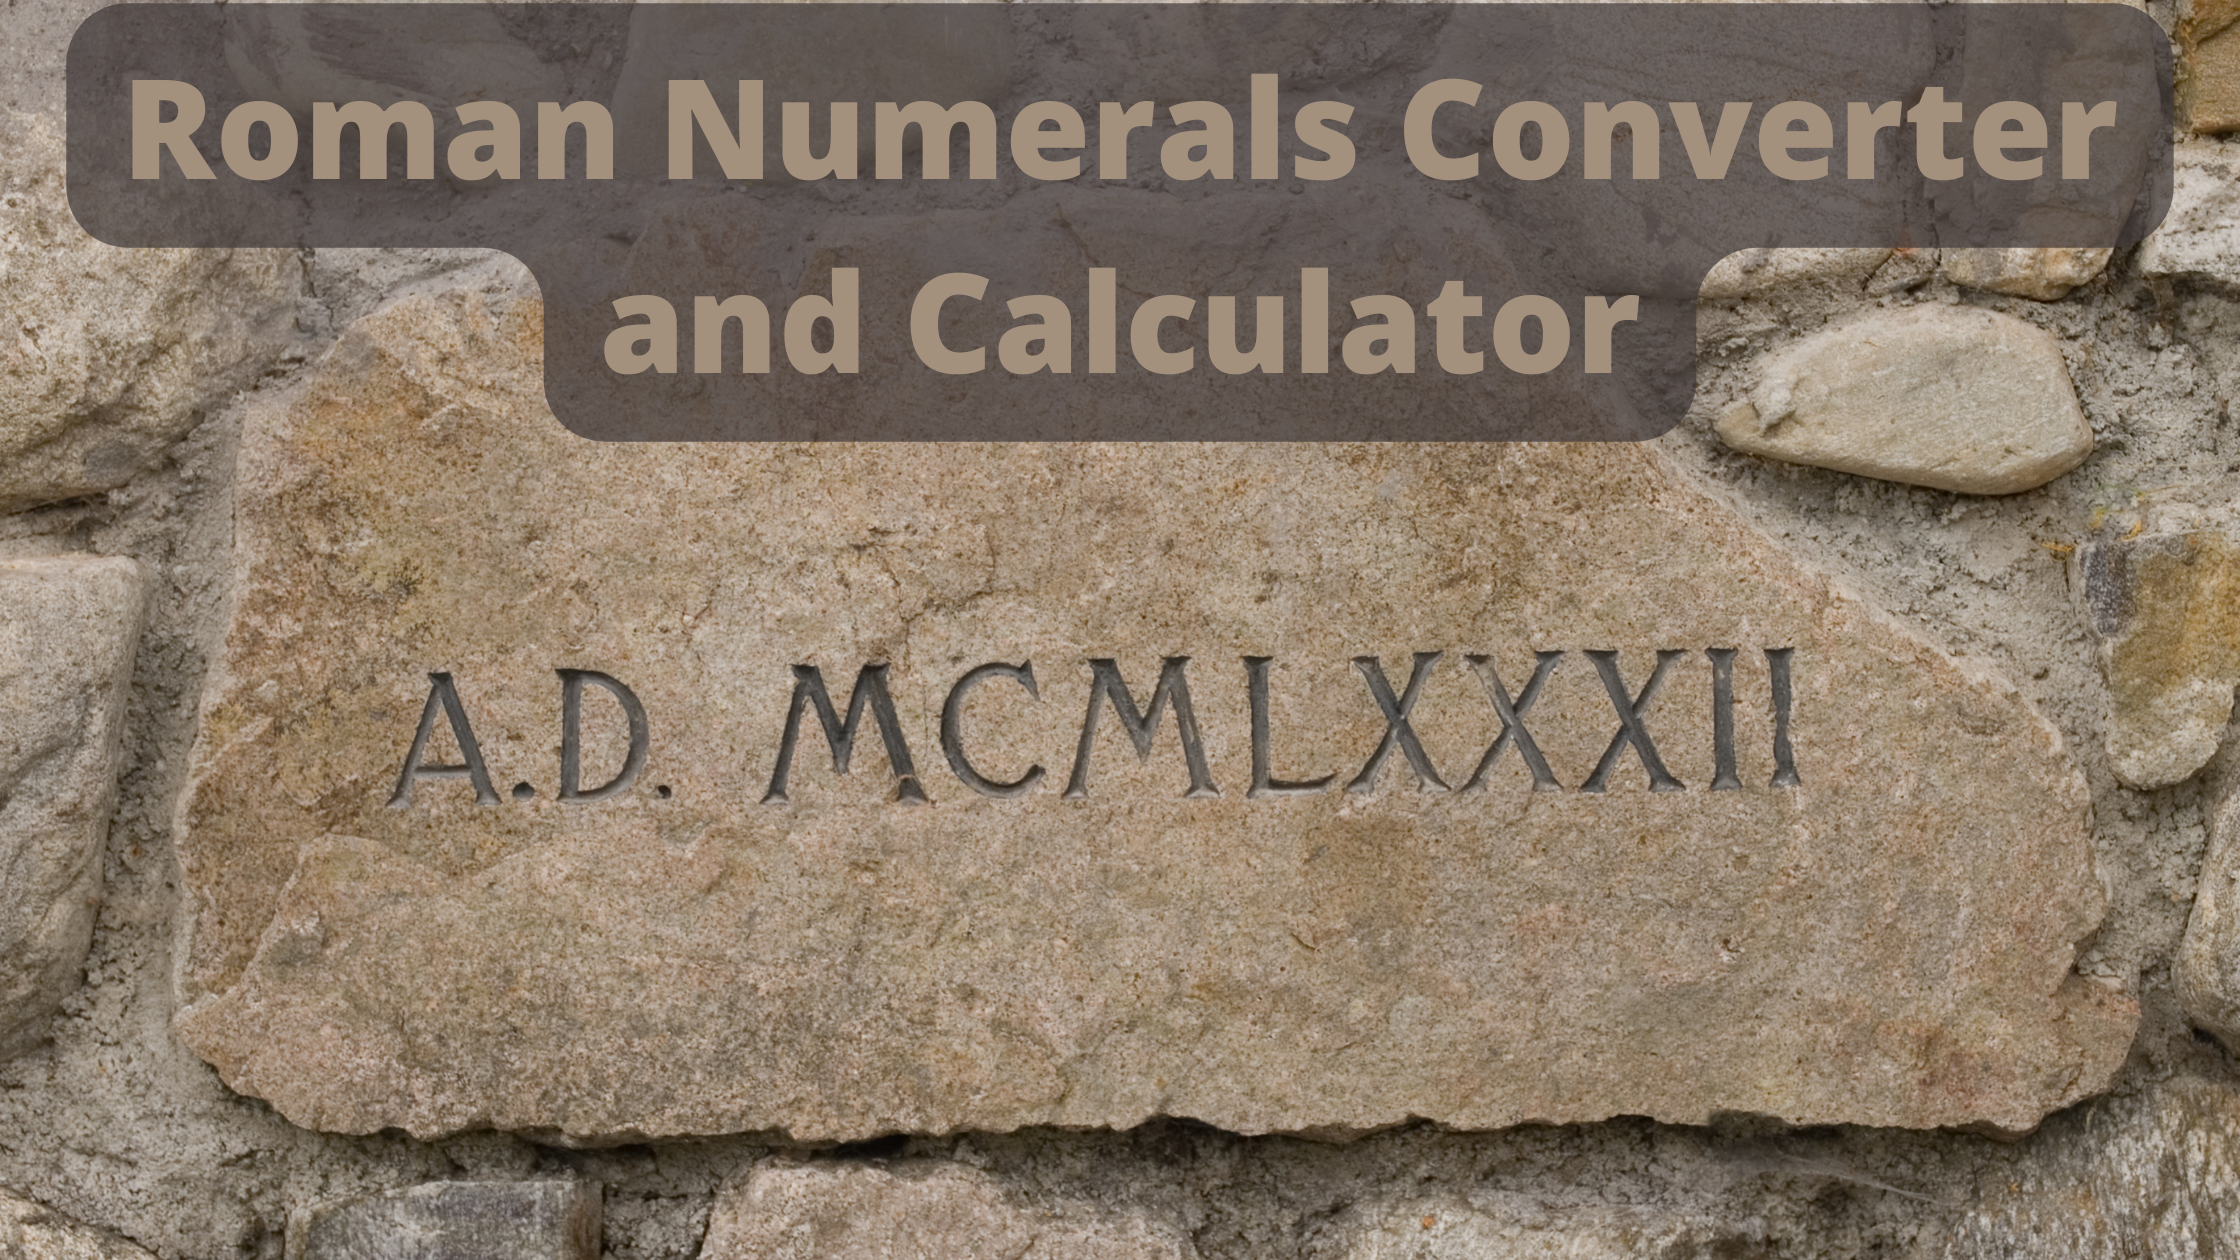 Roman numerals converter